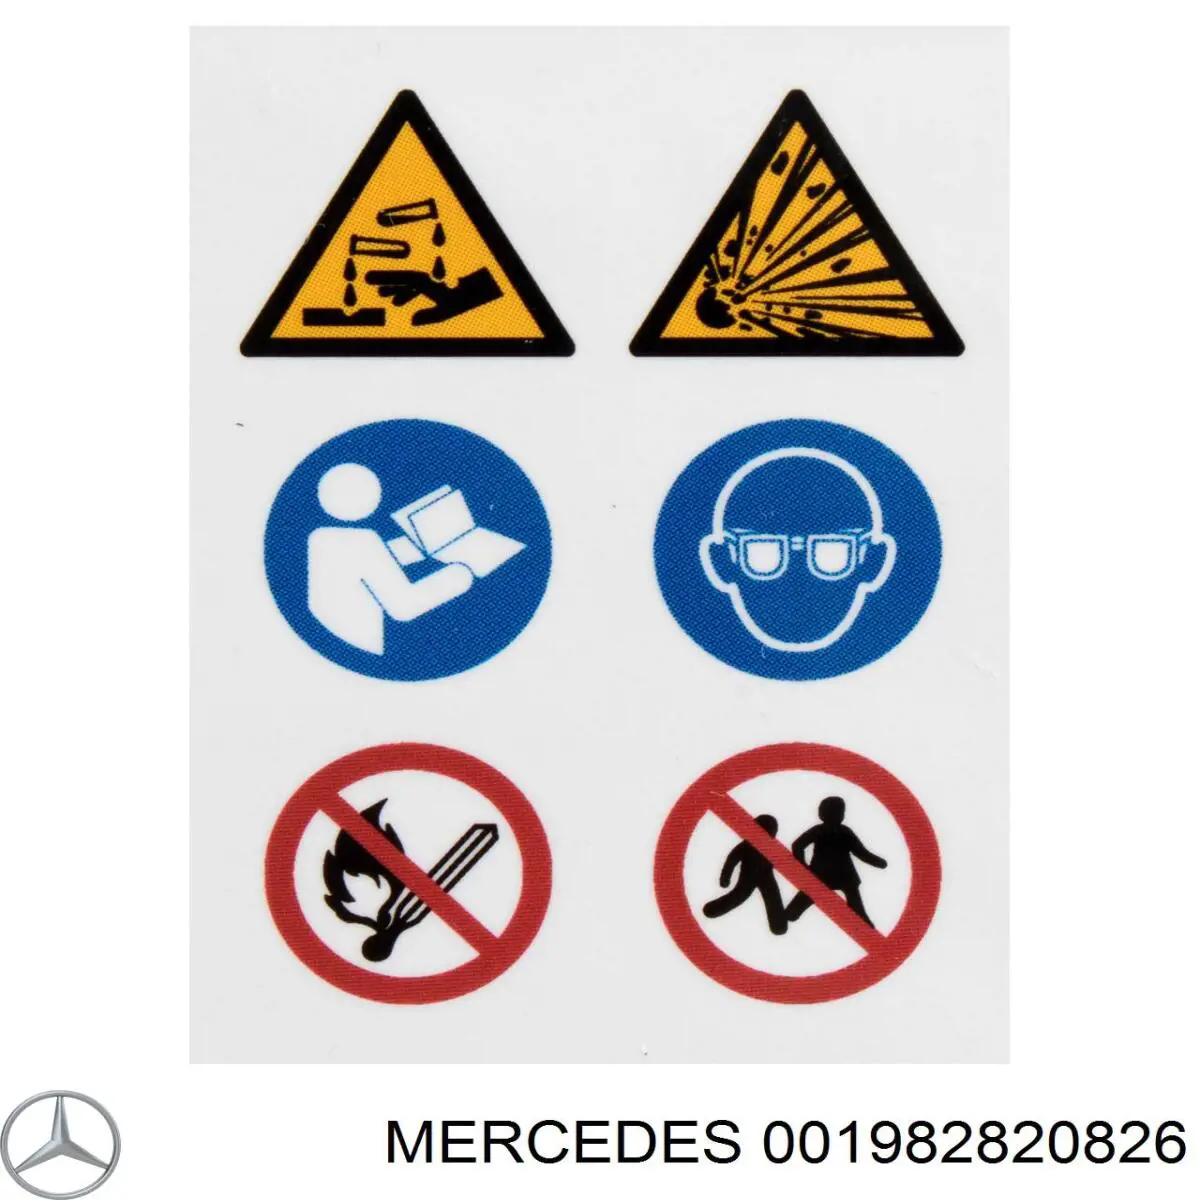 Batería de Arranque Mercedes (001982820826)